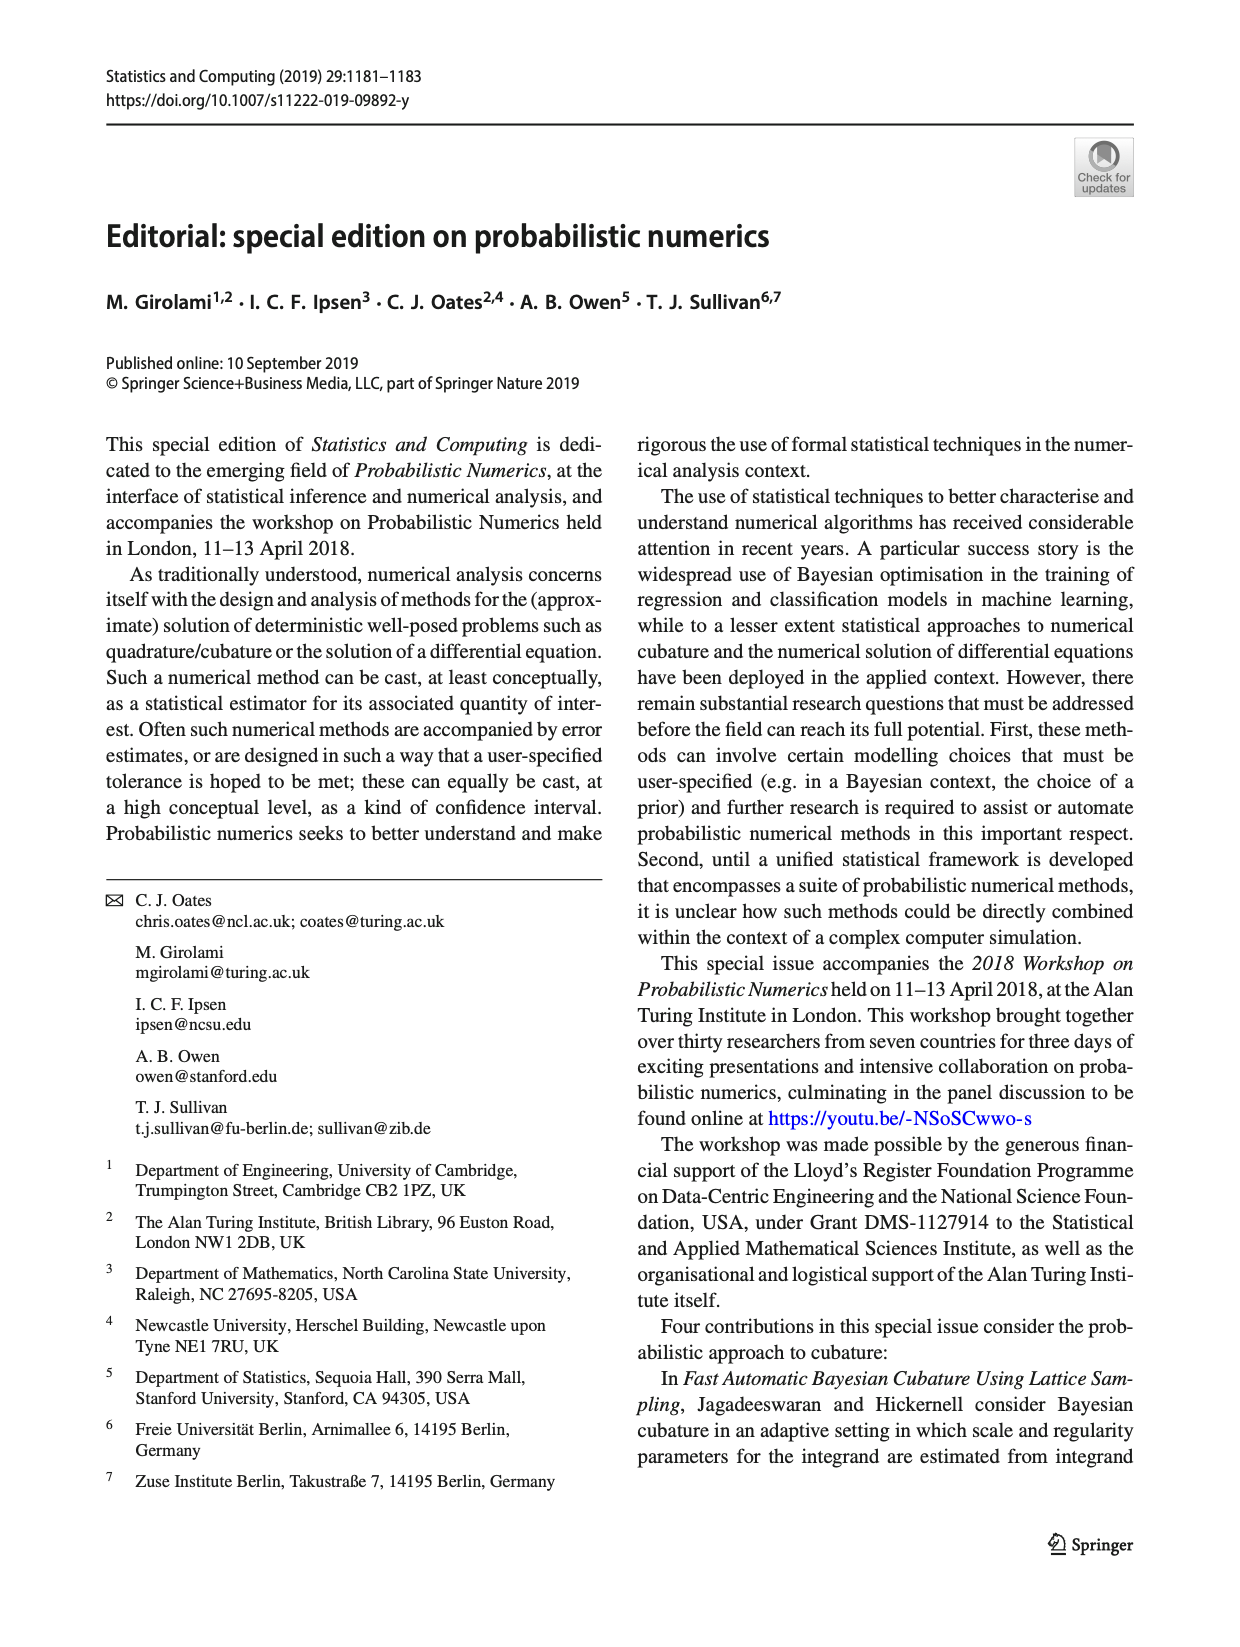 Editorial: Special edition on probabilistic numerics